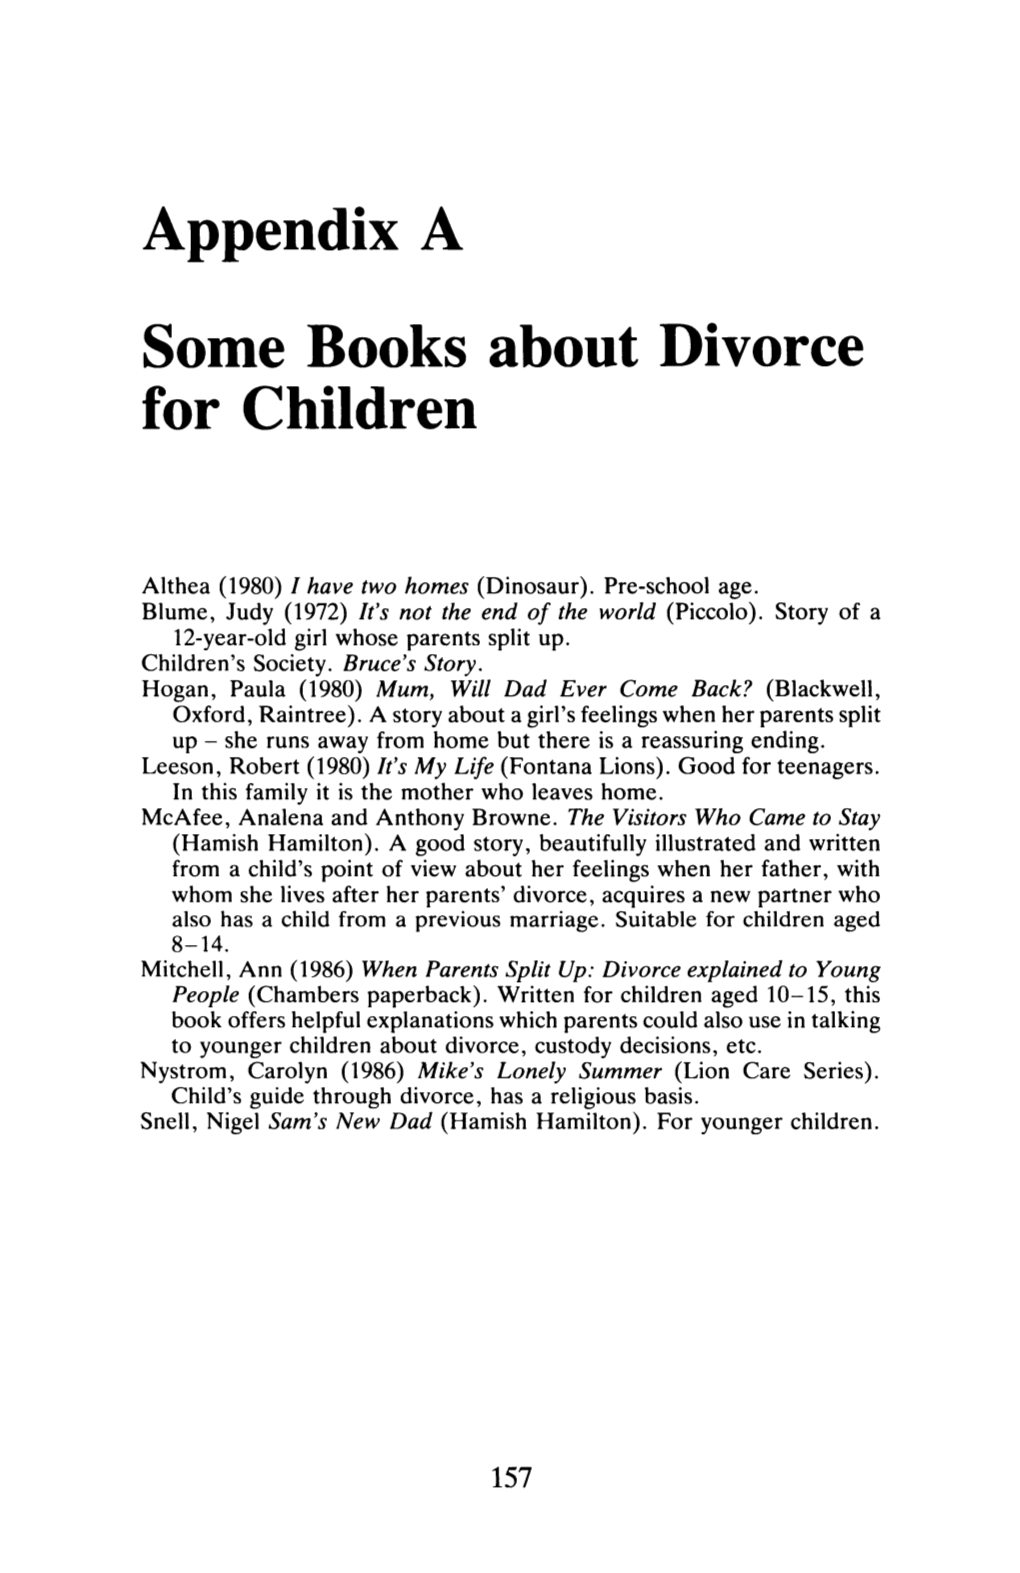 Appendix a Some Books About Divorce for Children